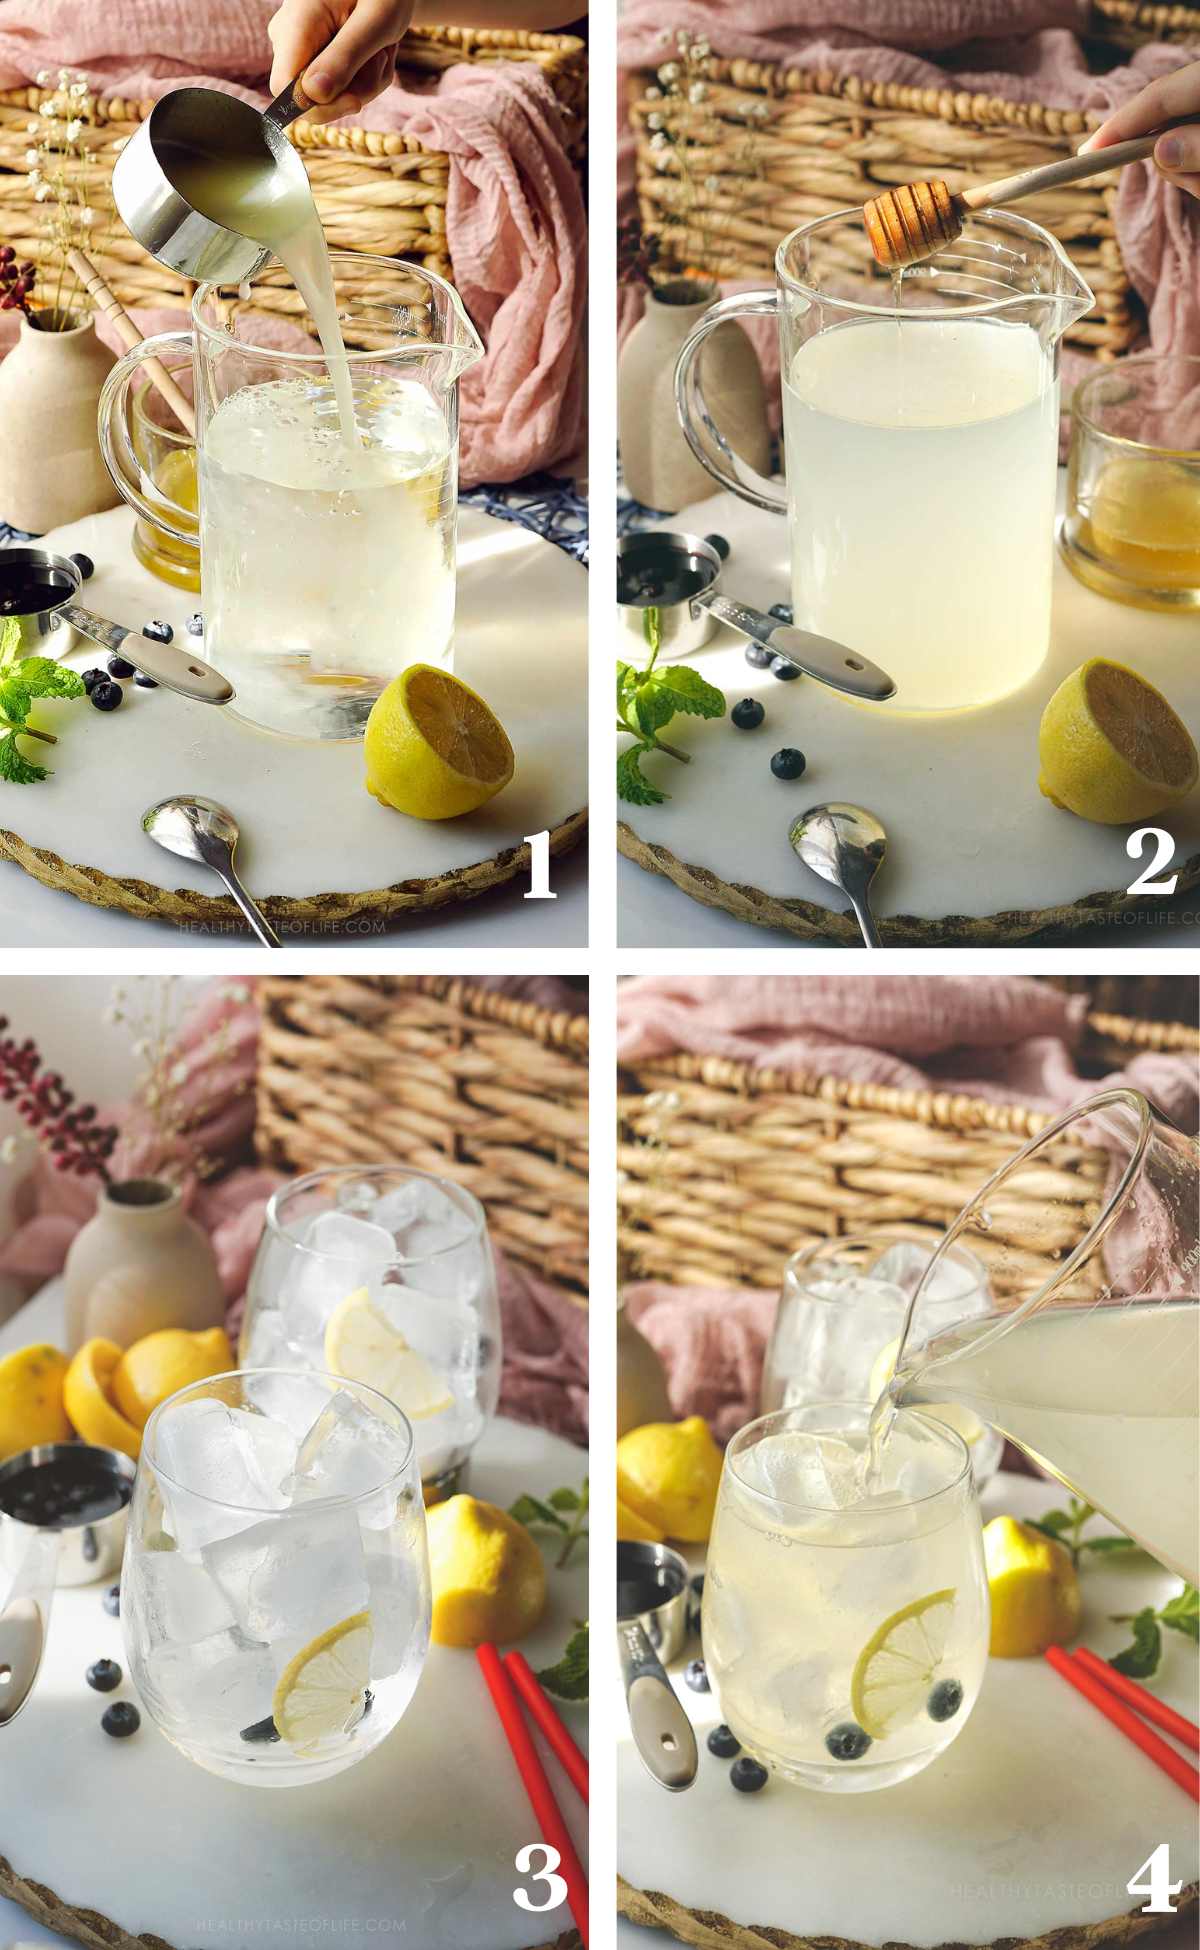 Process images showing steps how to make elderberry lemonade.